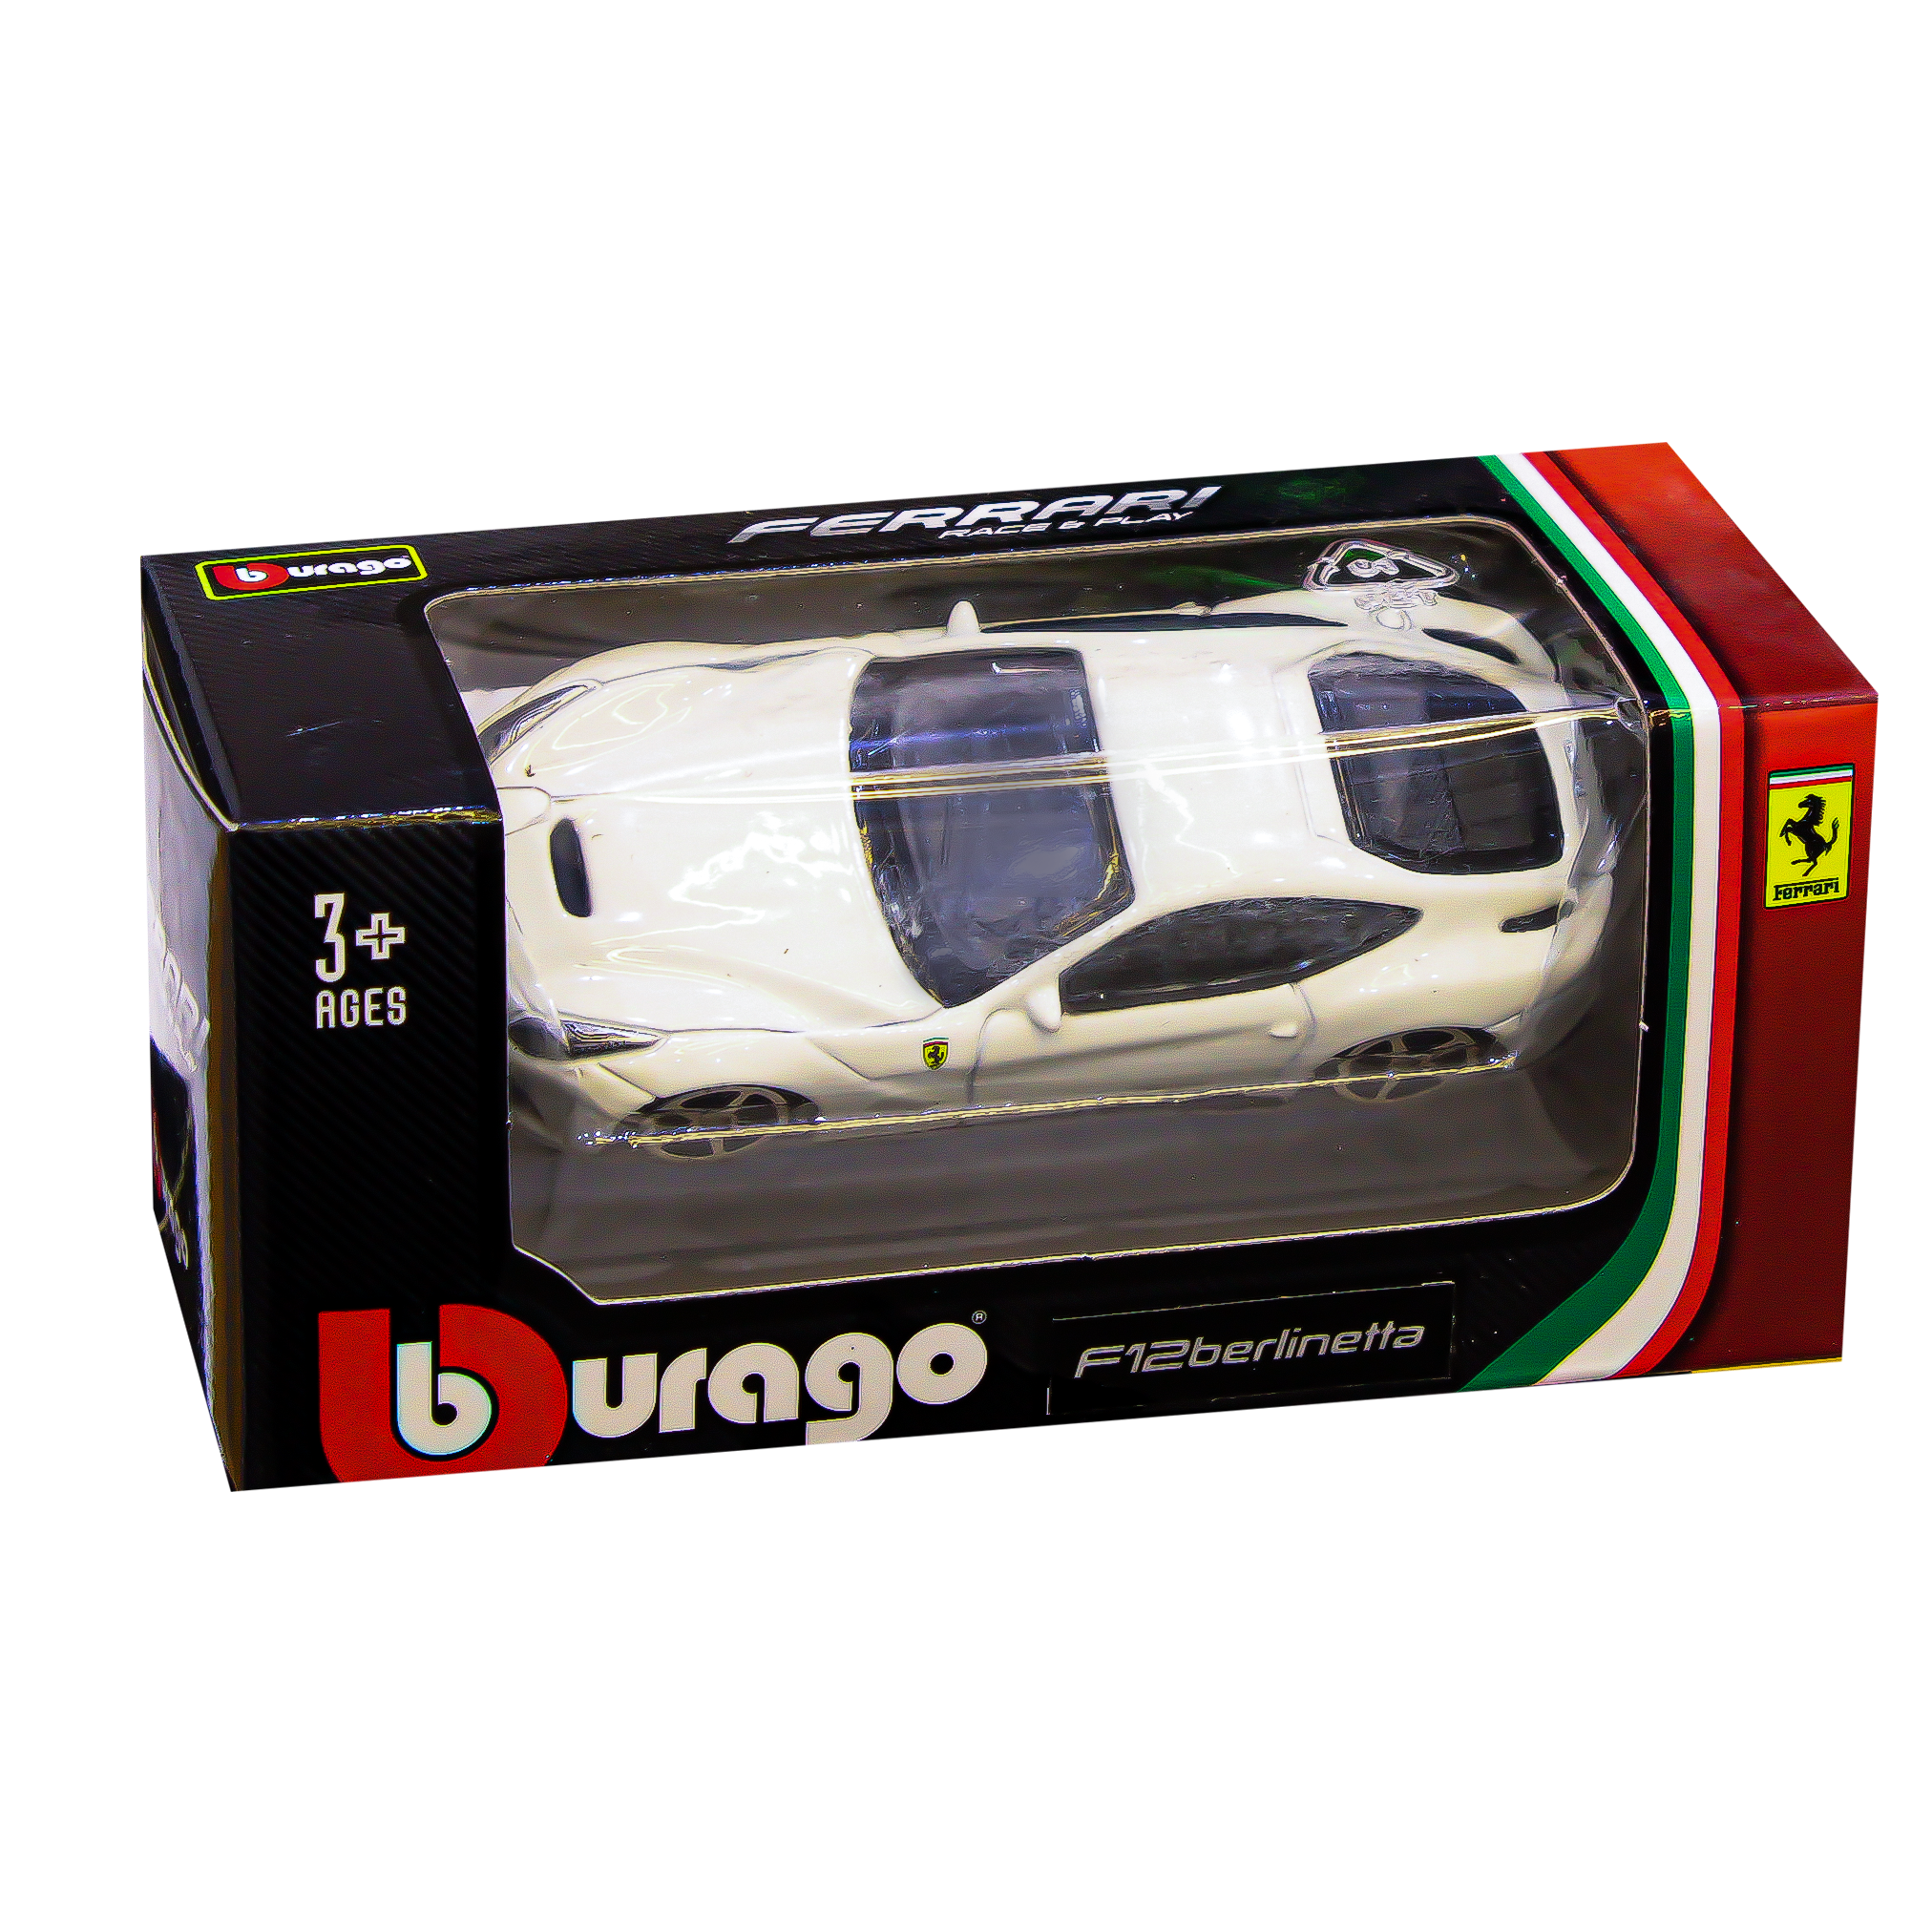 Burago Ferrari Race & Play Car - F12 Berlinetta